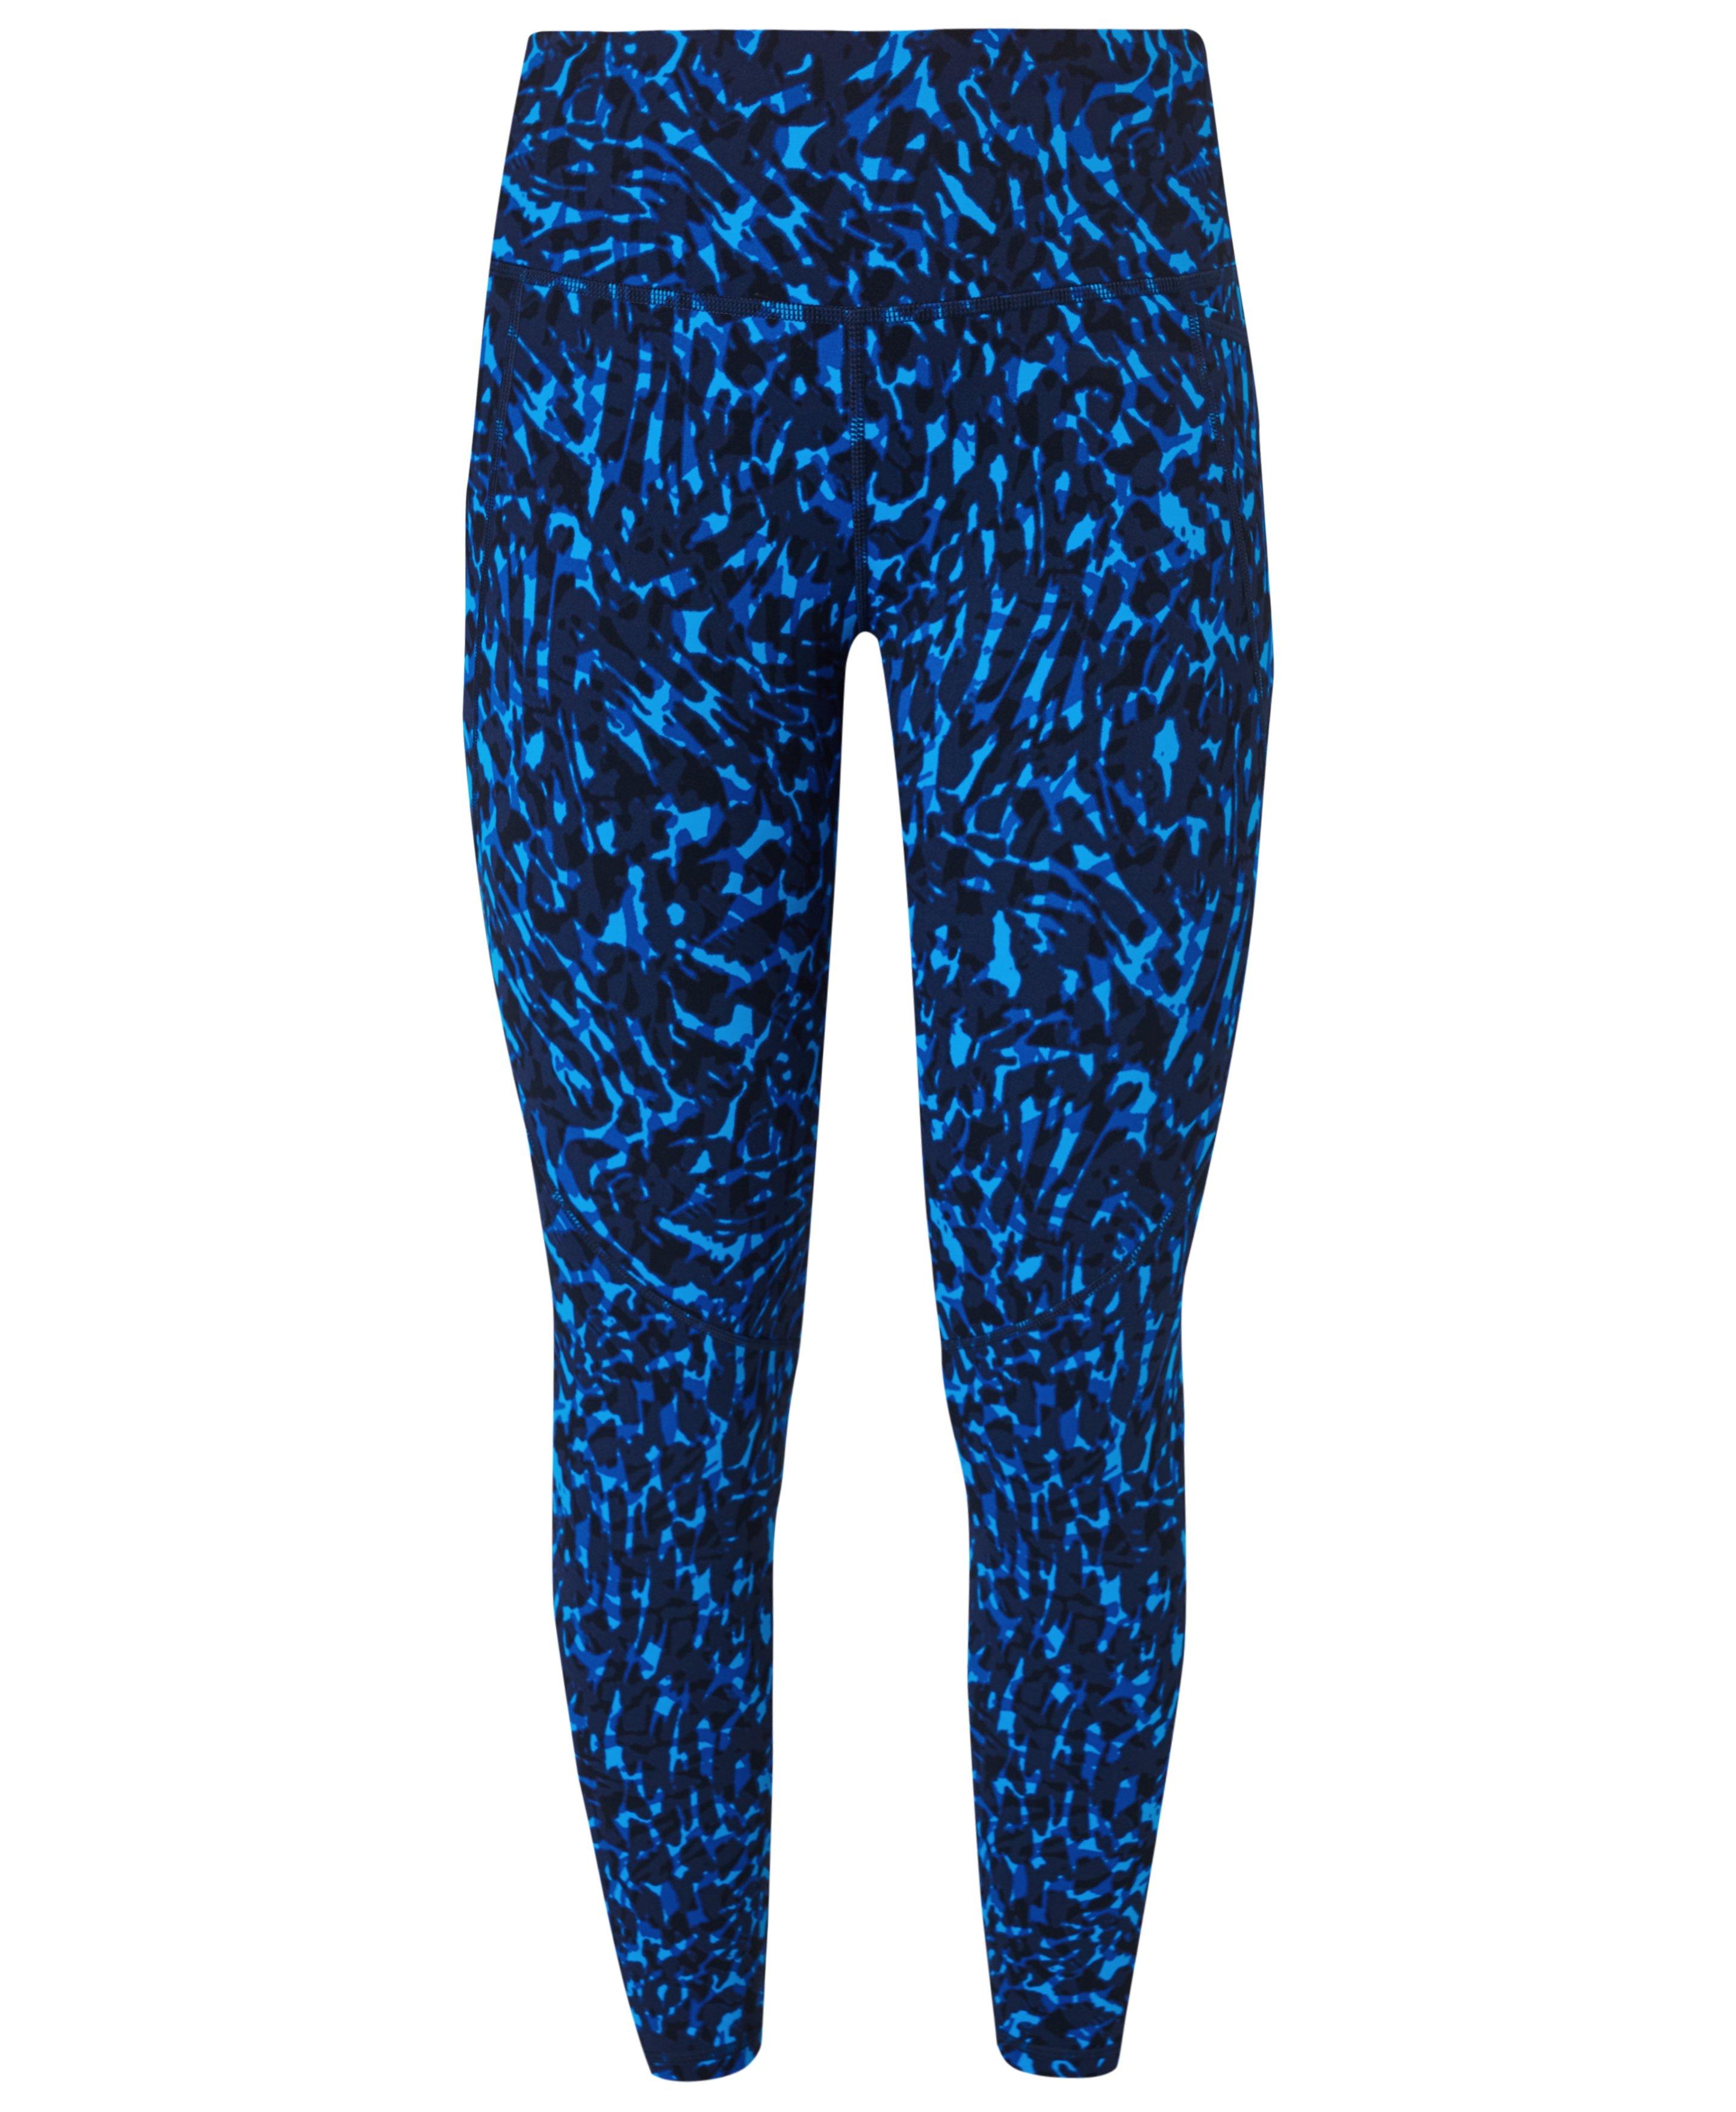 Power 7/8 Workout Leggings - Blue Terazzo Print, Women's Leggings